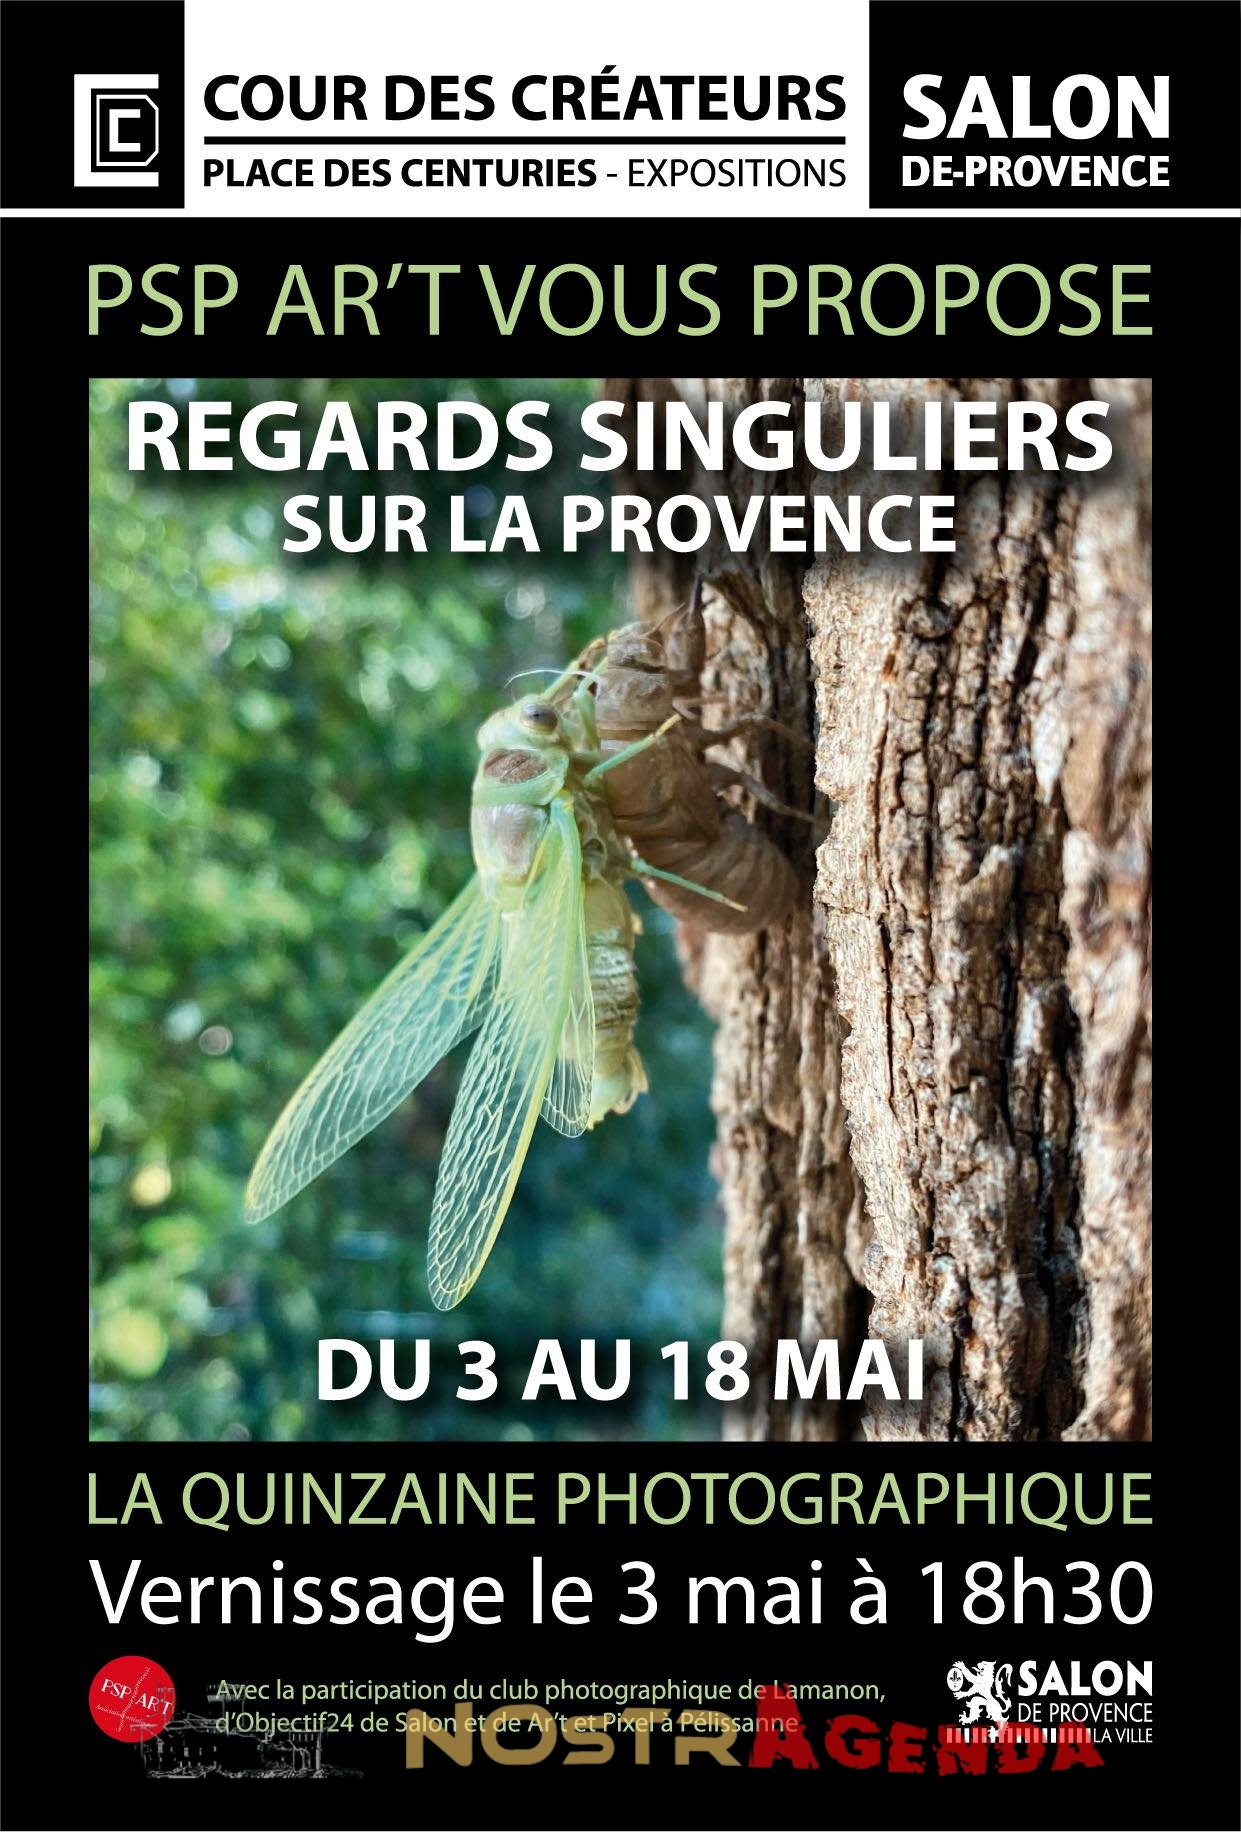 “Regards singuliers sur la Provence“ 03-au-18-mai-Exposition-agenda-Nostragenda-Salon